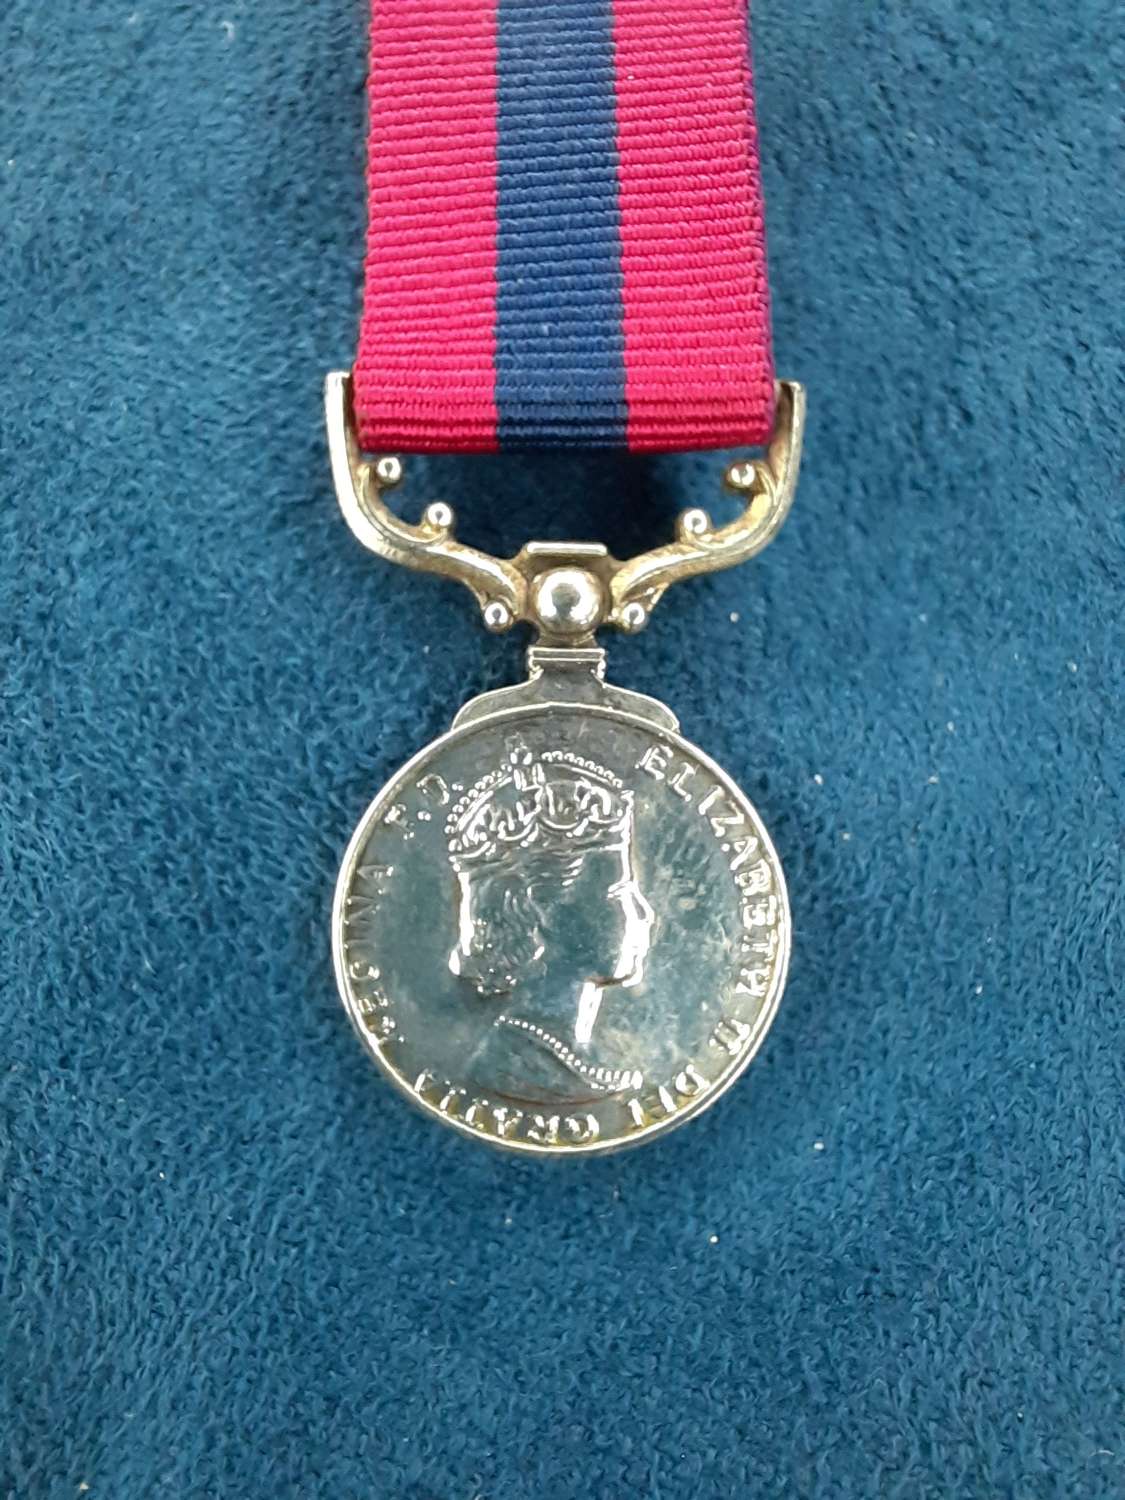 Miniature Distinguished Conduct Medal EIIR